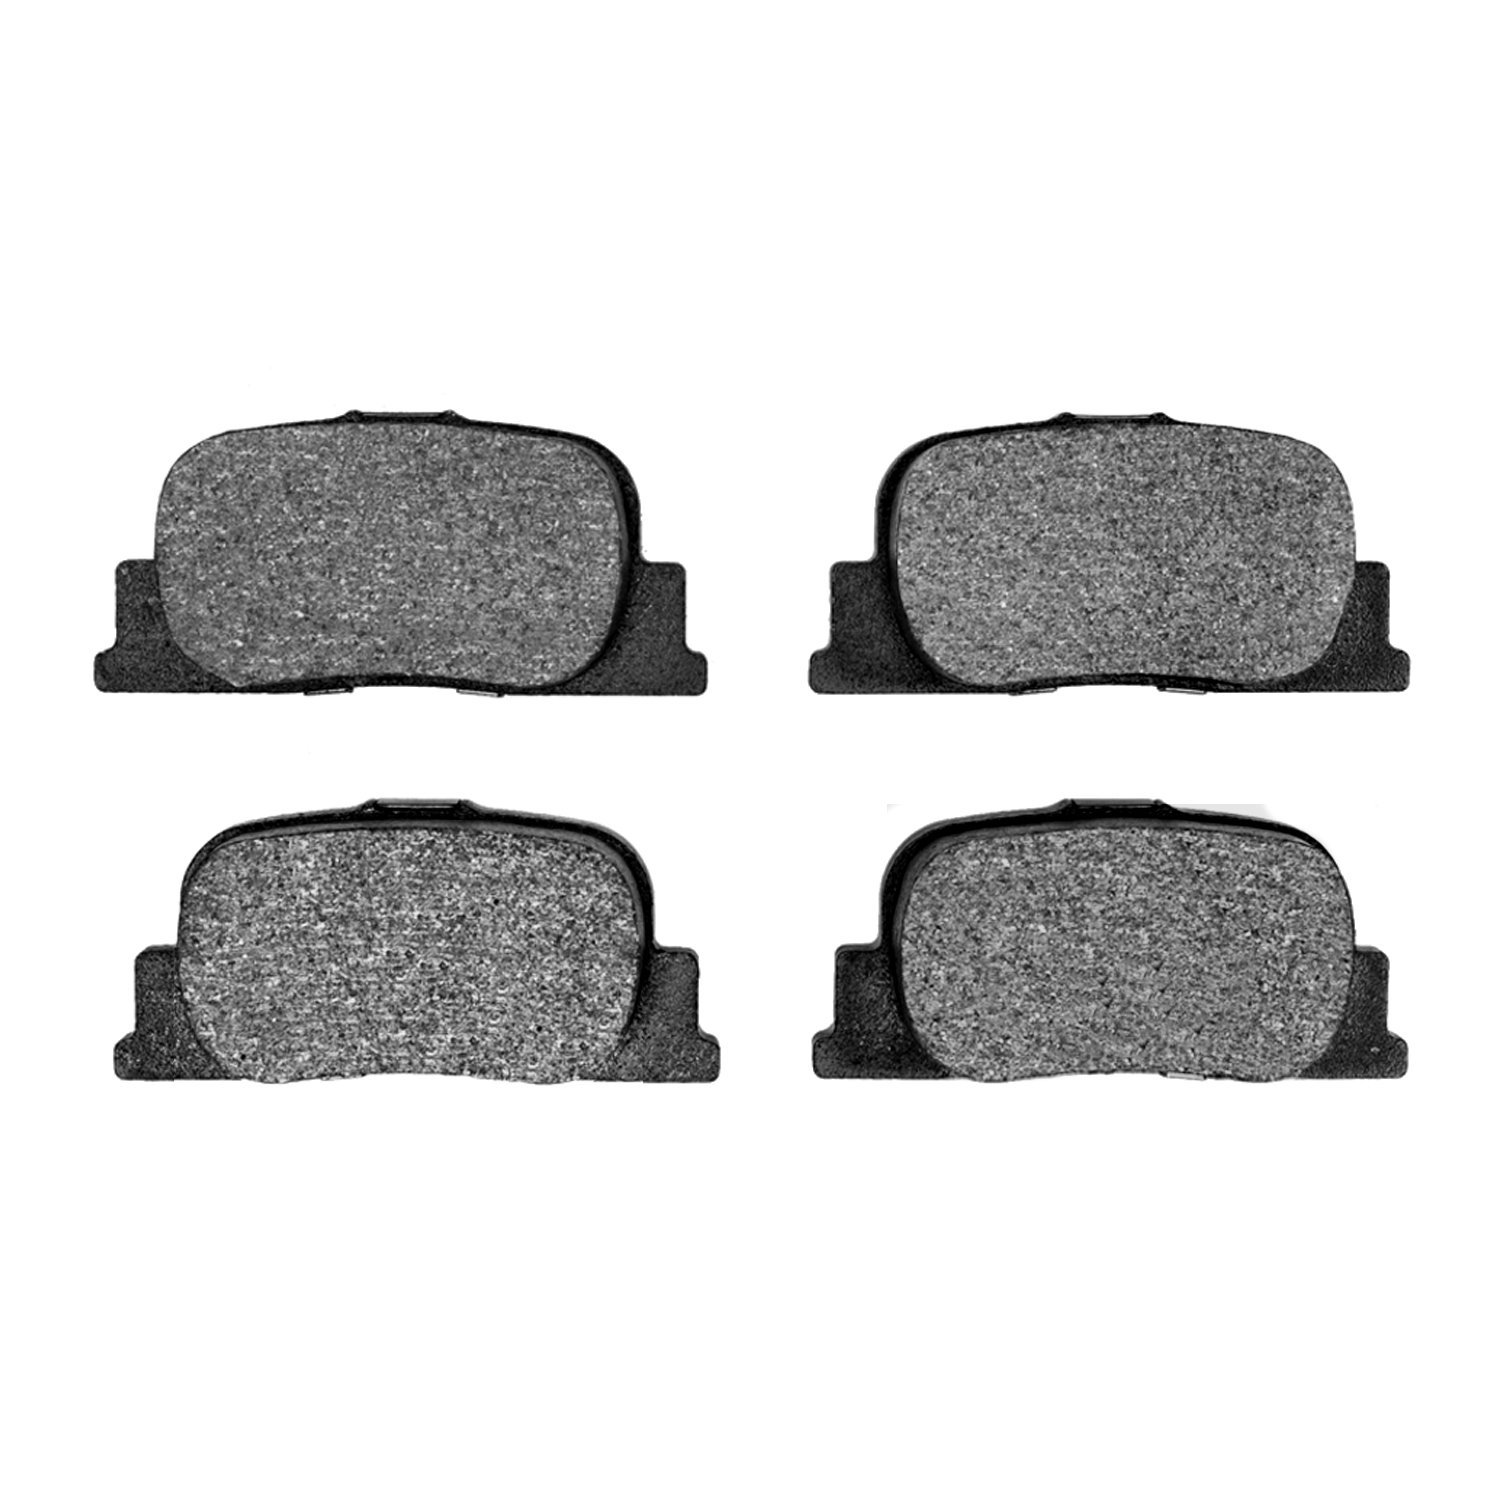 1310-0835-00 3000-Series Ceramic Brake Pads, 2000-2010 Multiple Makes/Models, Position: Rear